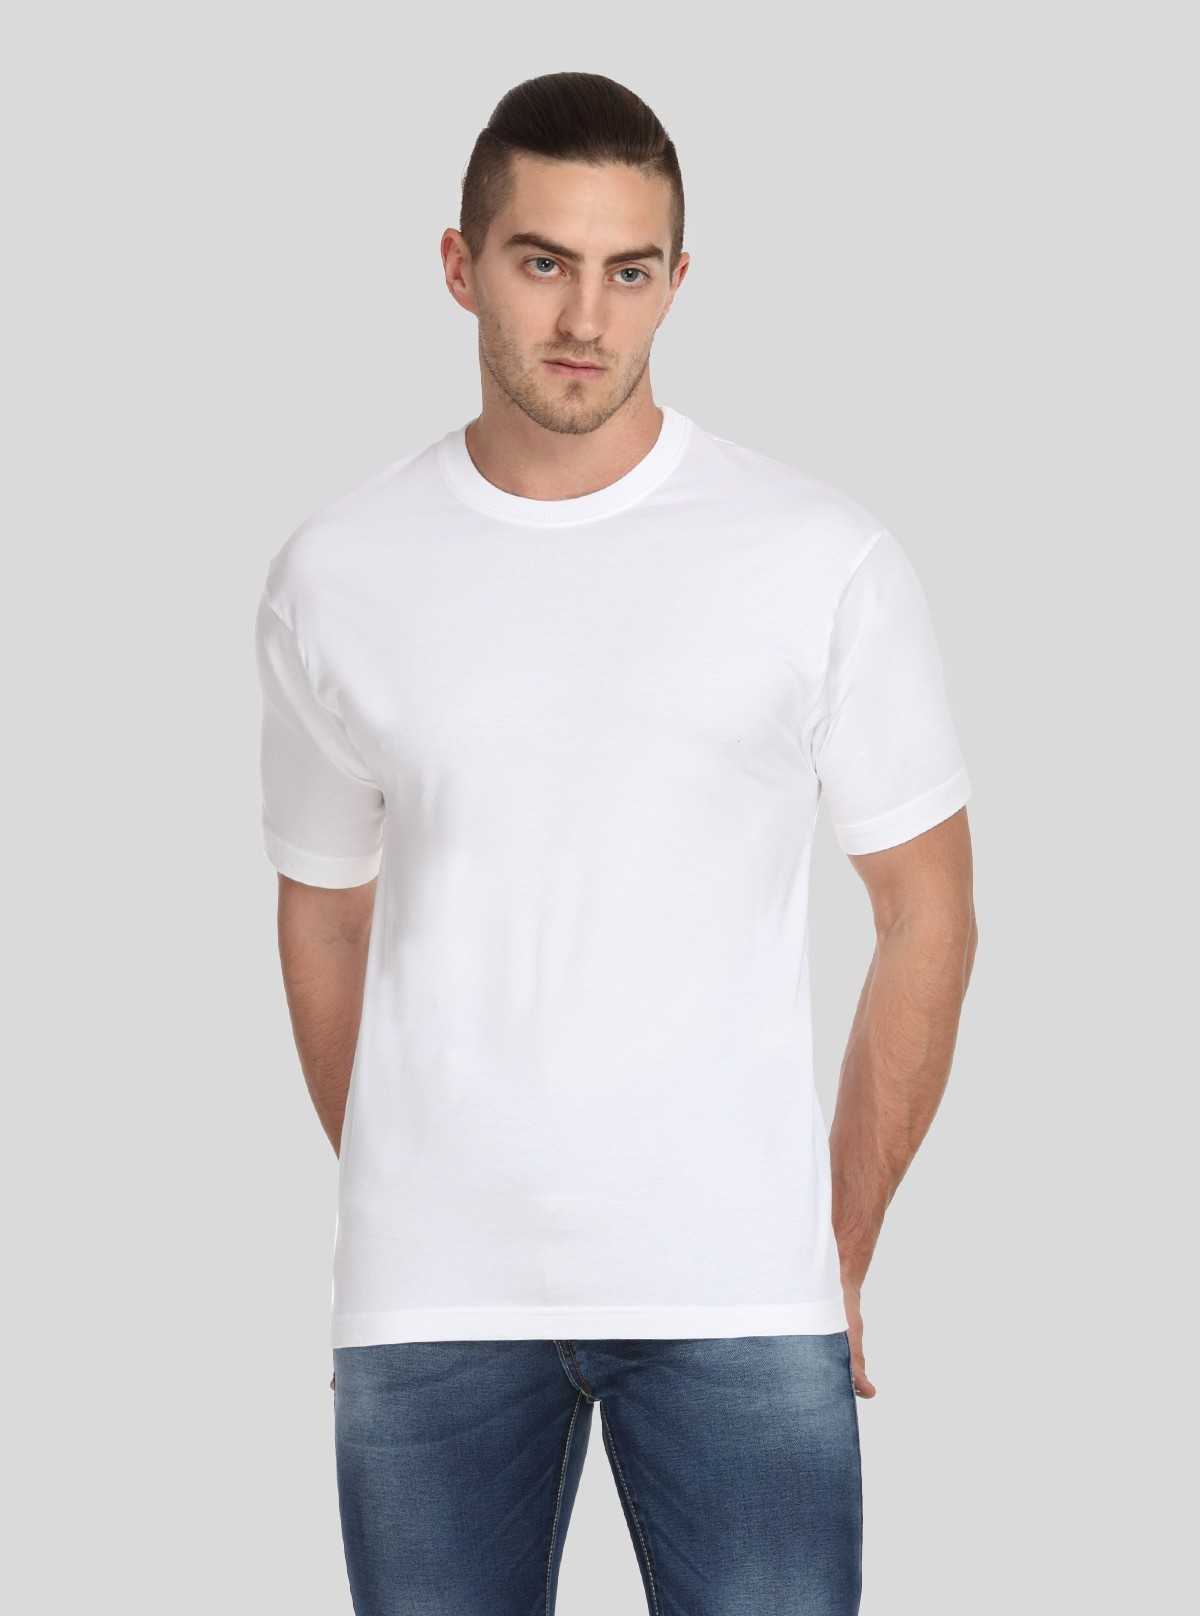 white crew neck tshirts | Short sleeved tee |bandf online| white is ...